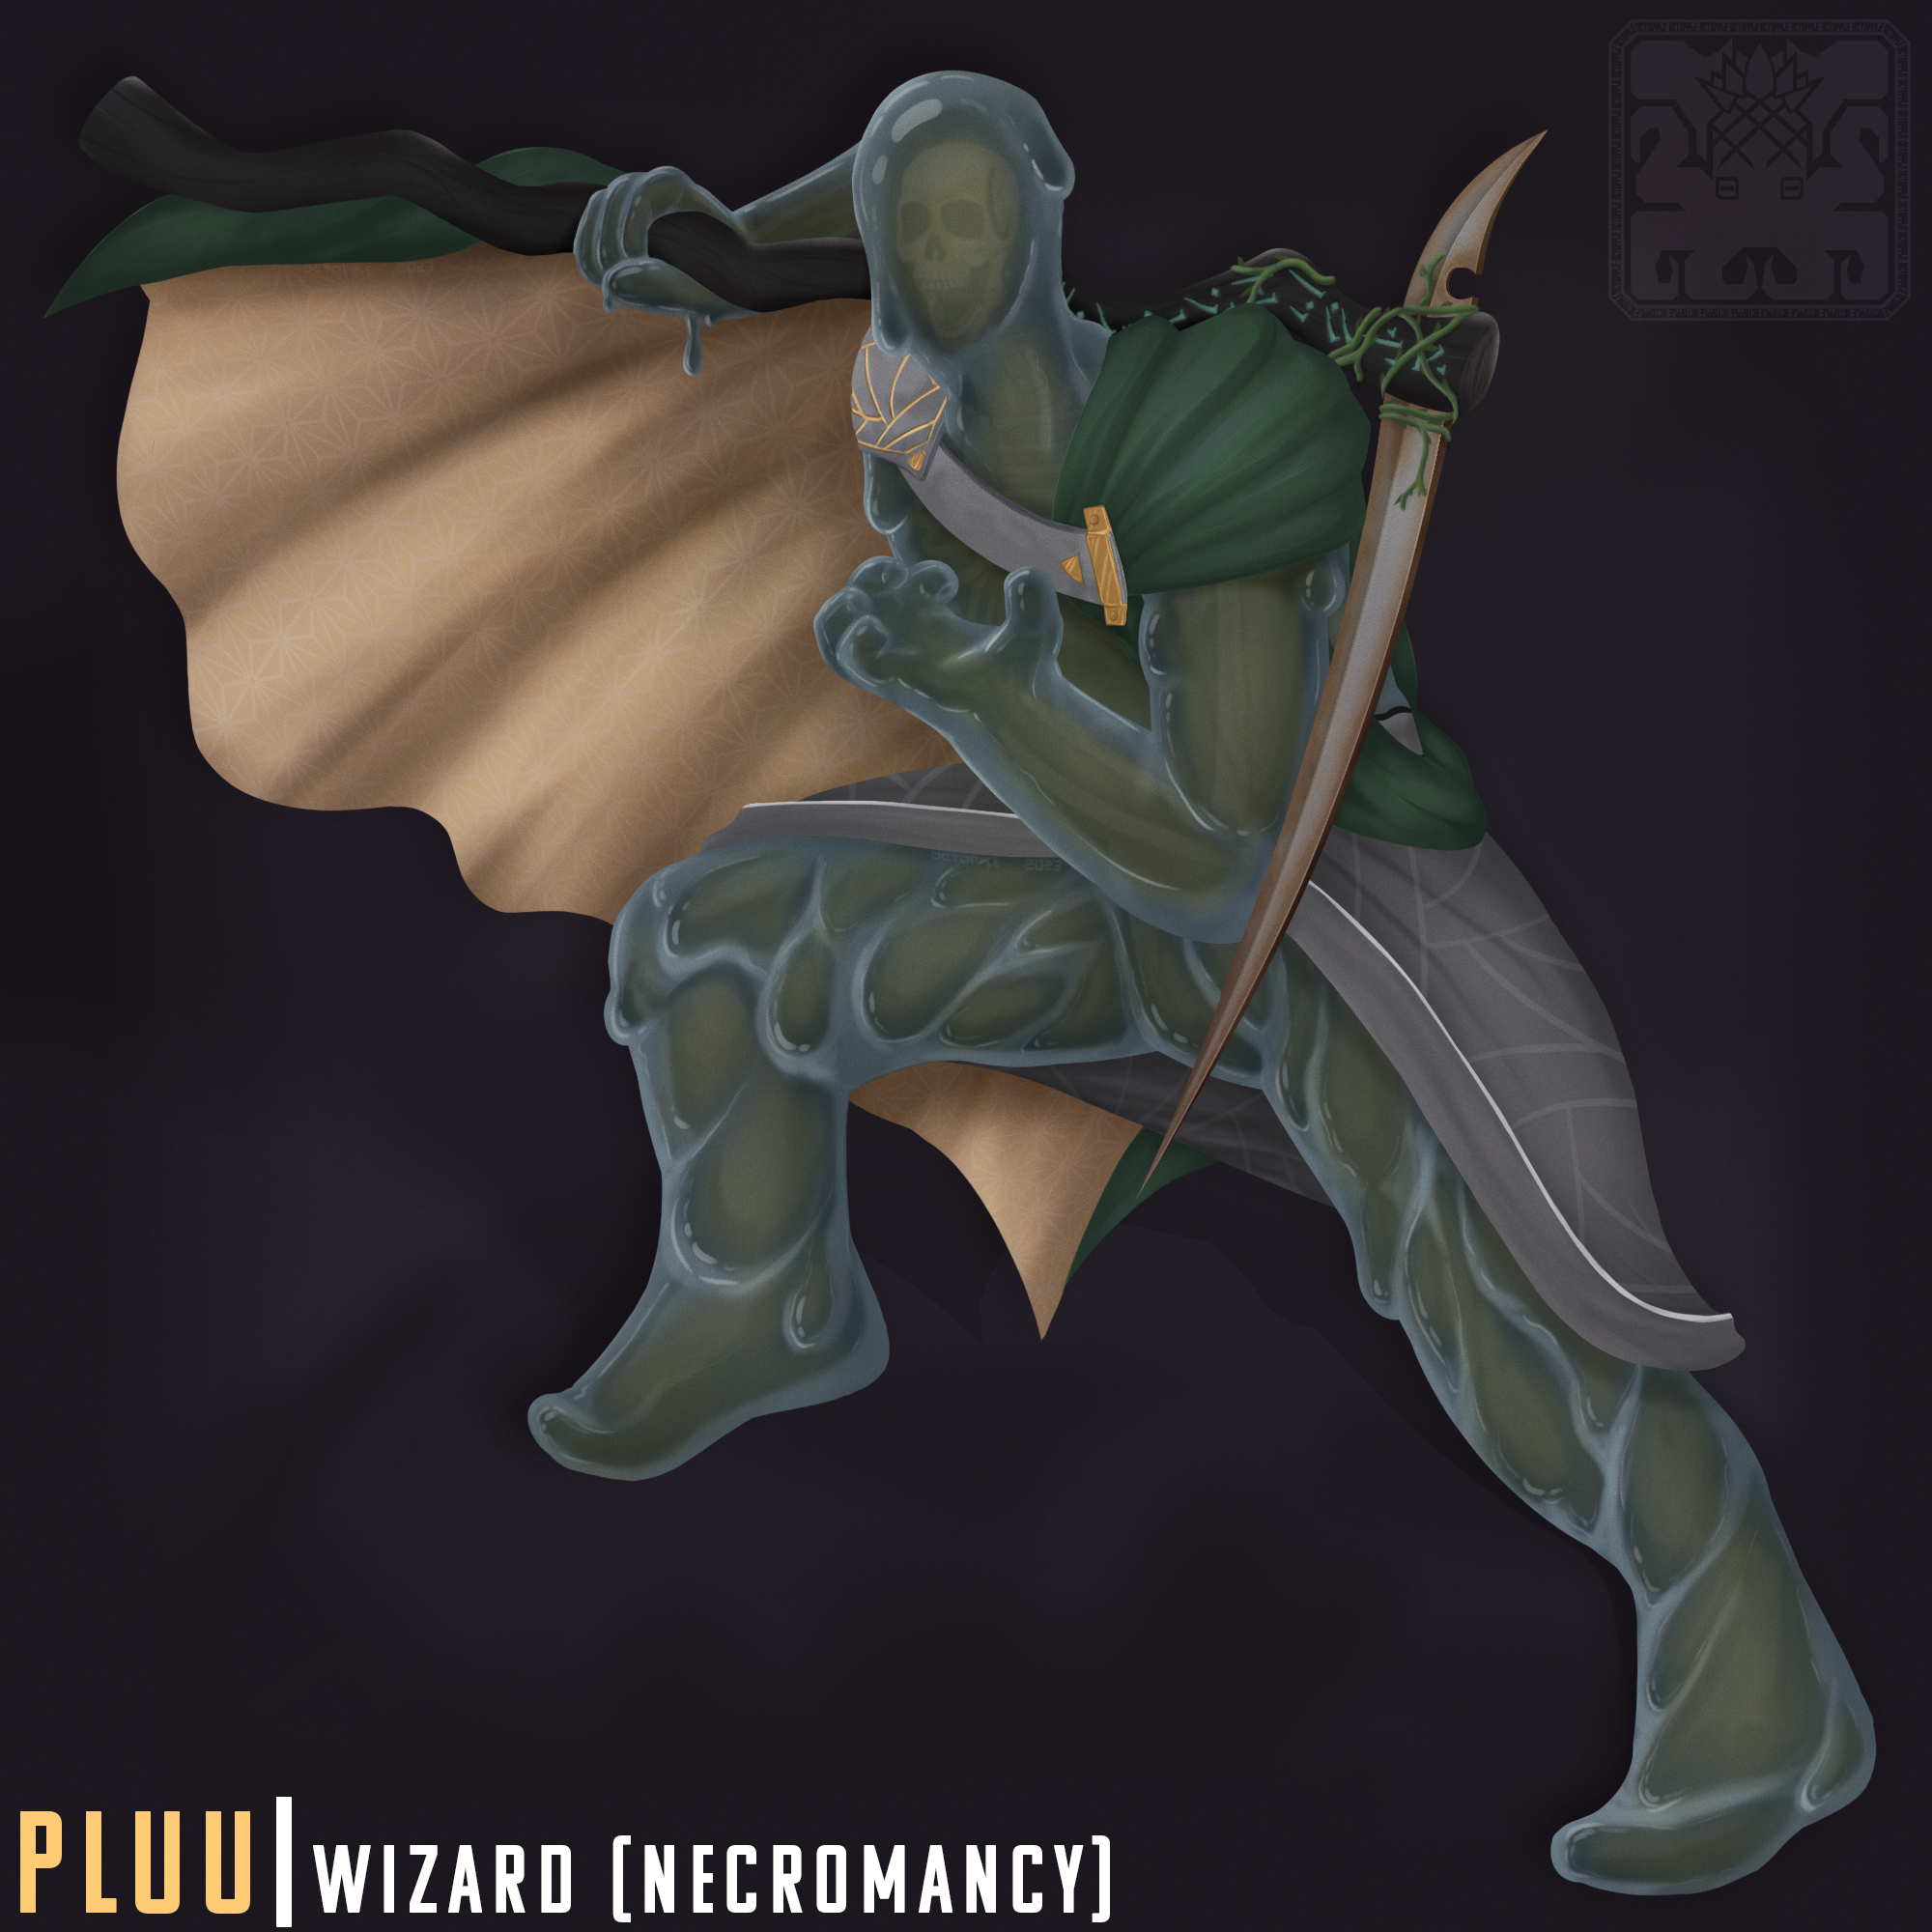 Pluu the Necromancer